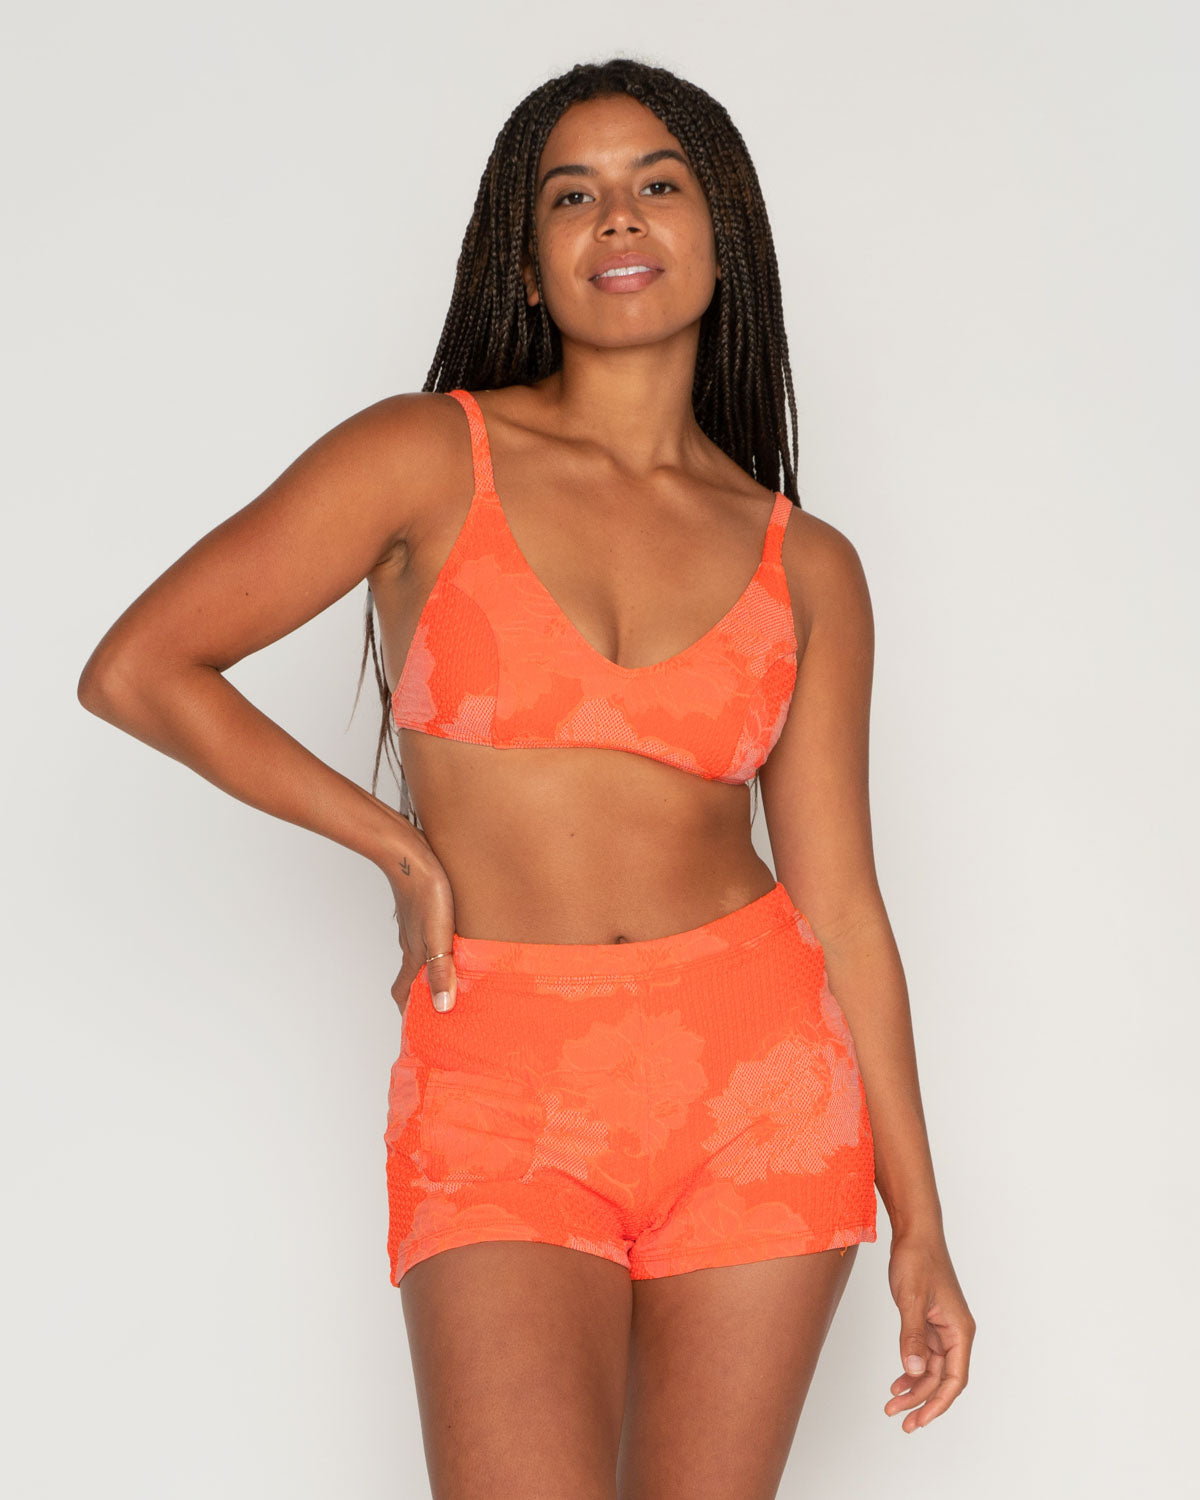 Bobby Squeeze Orange Textured Floral Pattern Bikini Top Swim Suit